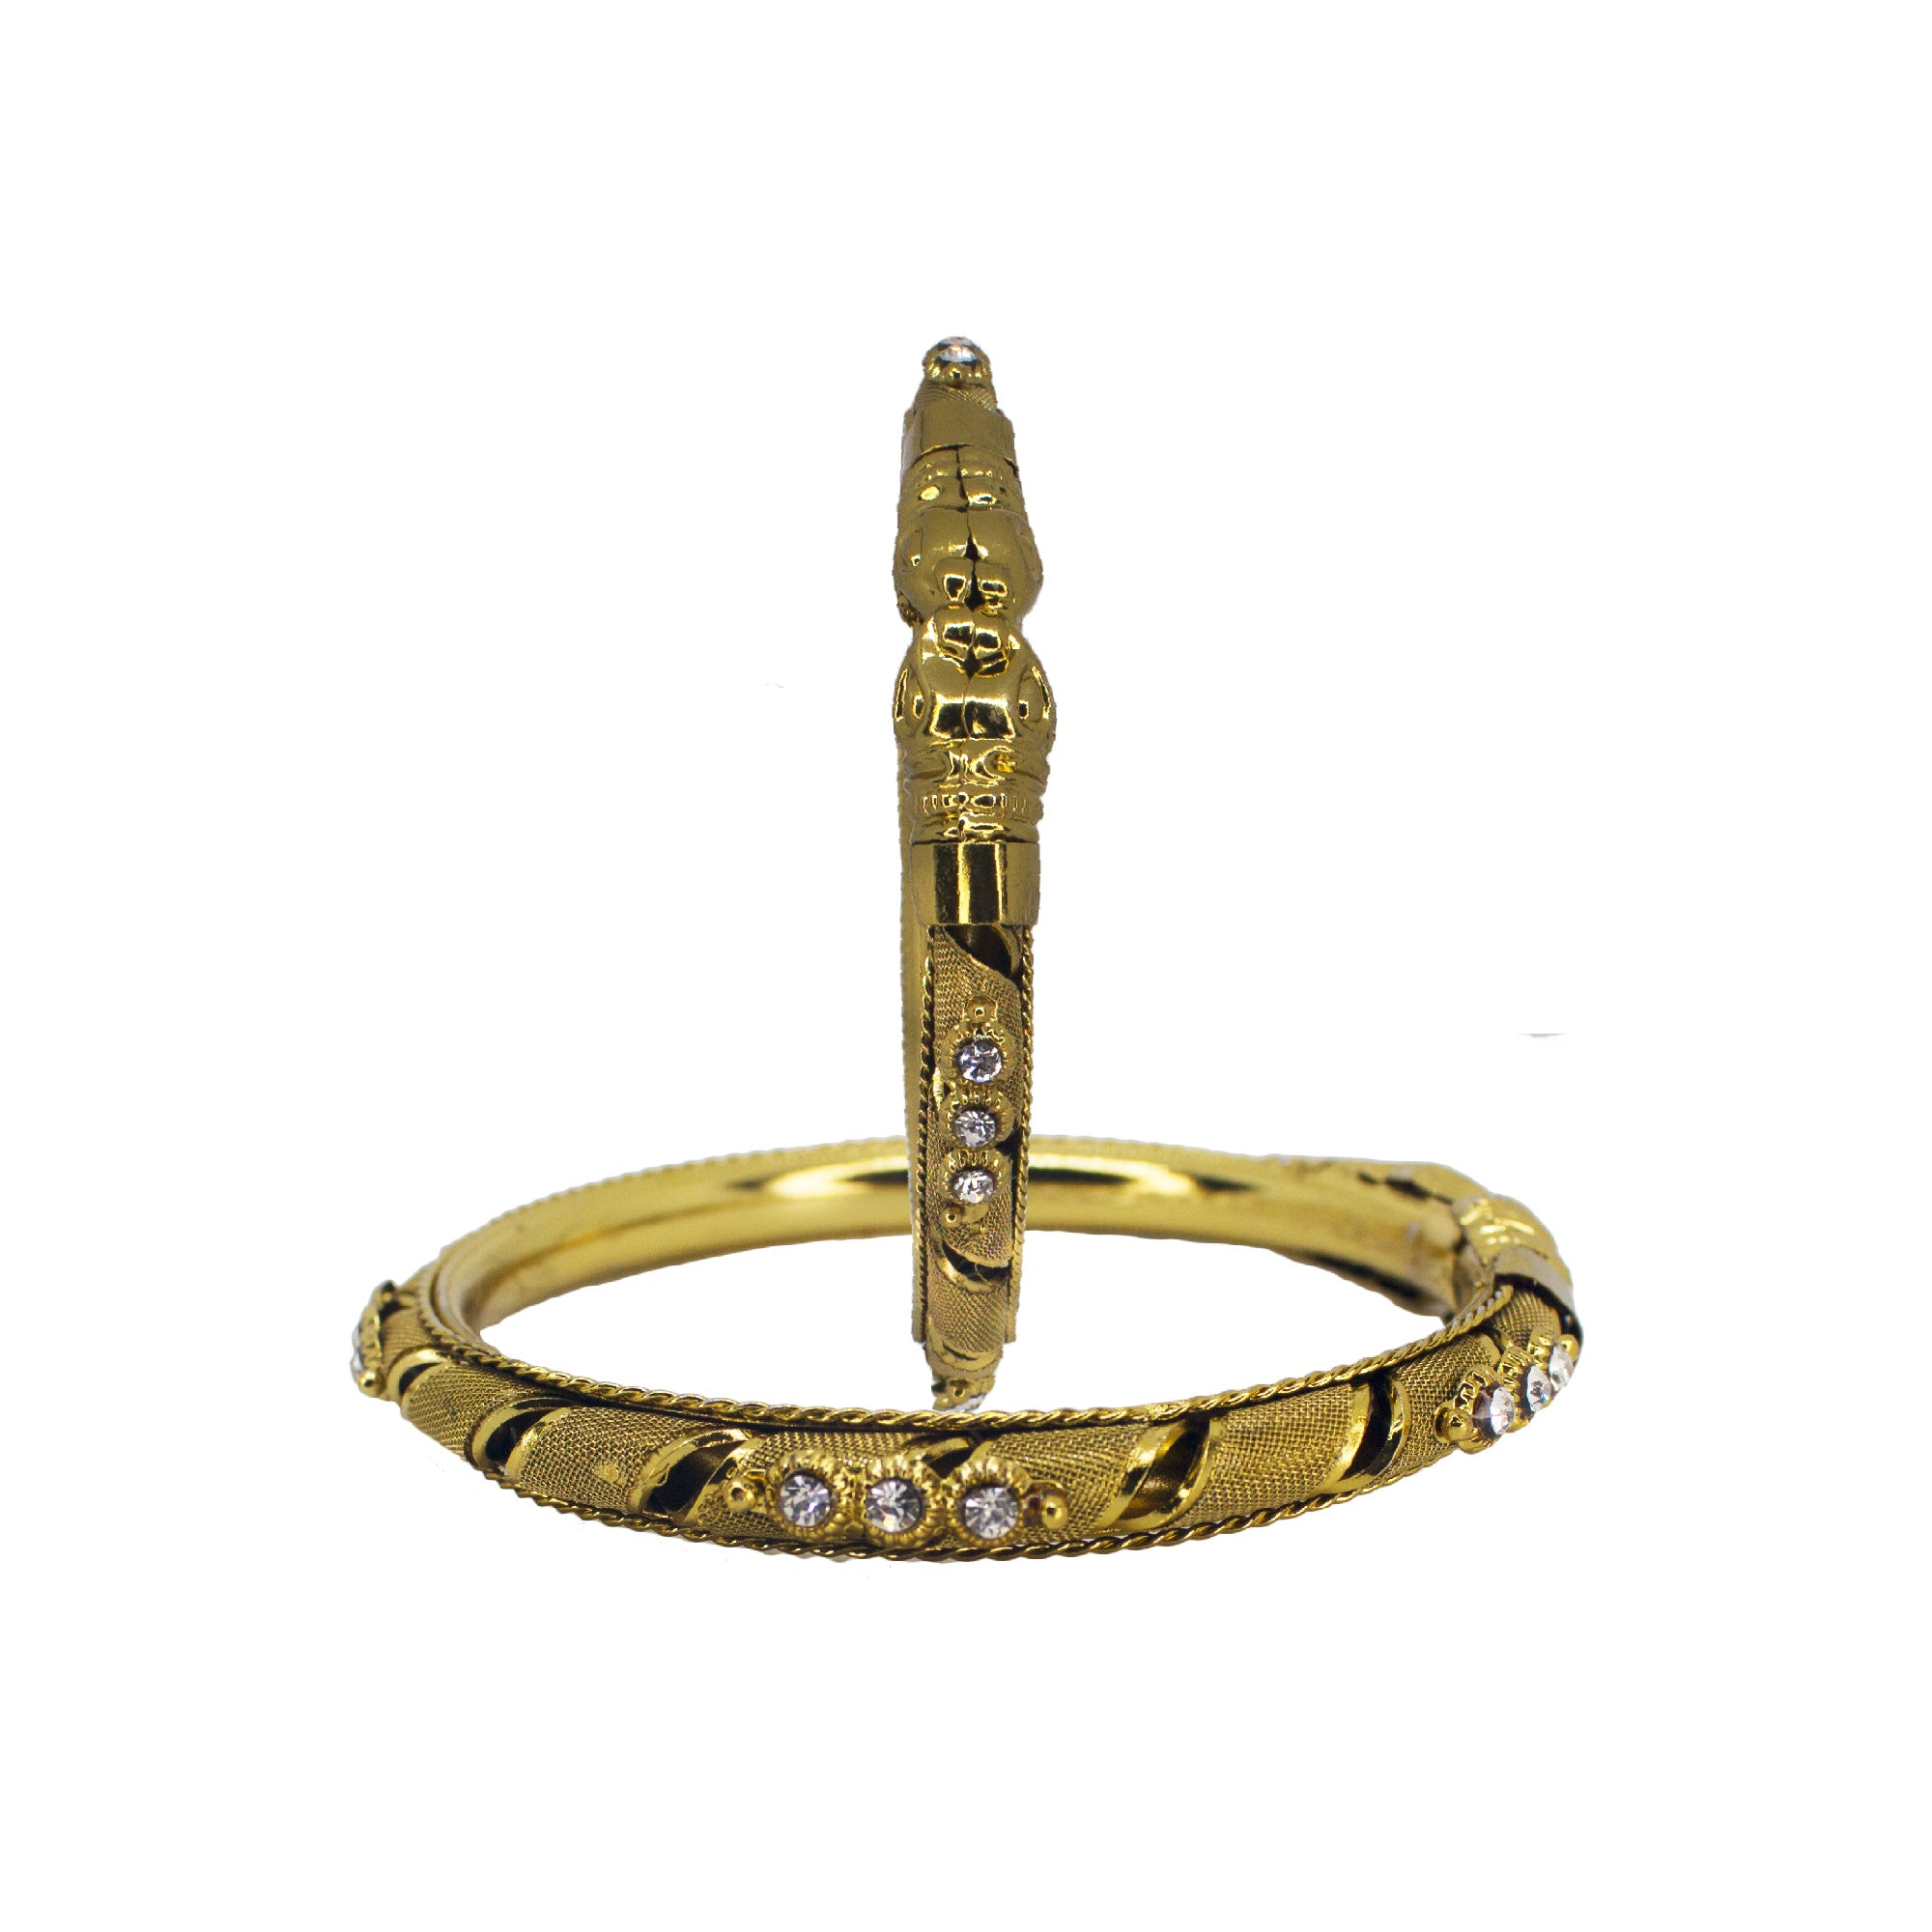 Abhinn Golden Spiral Design Bangle Set With White CZ Stone For Women